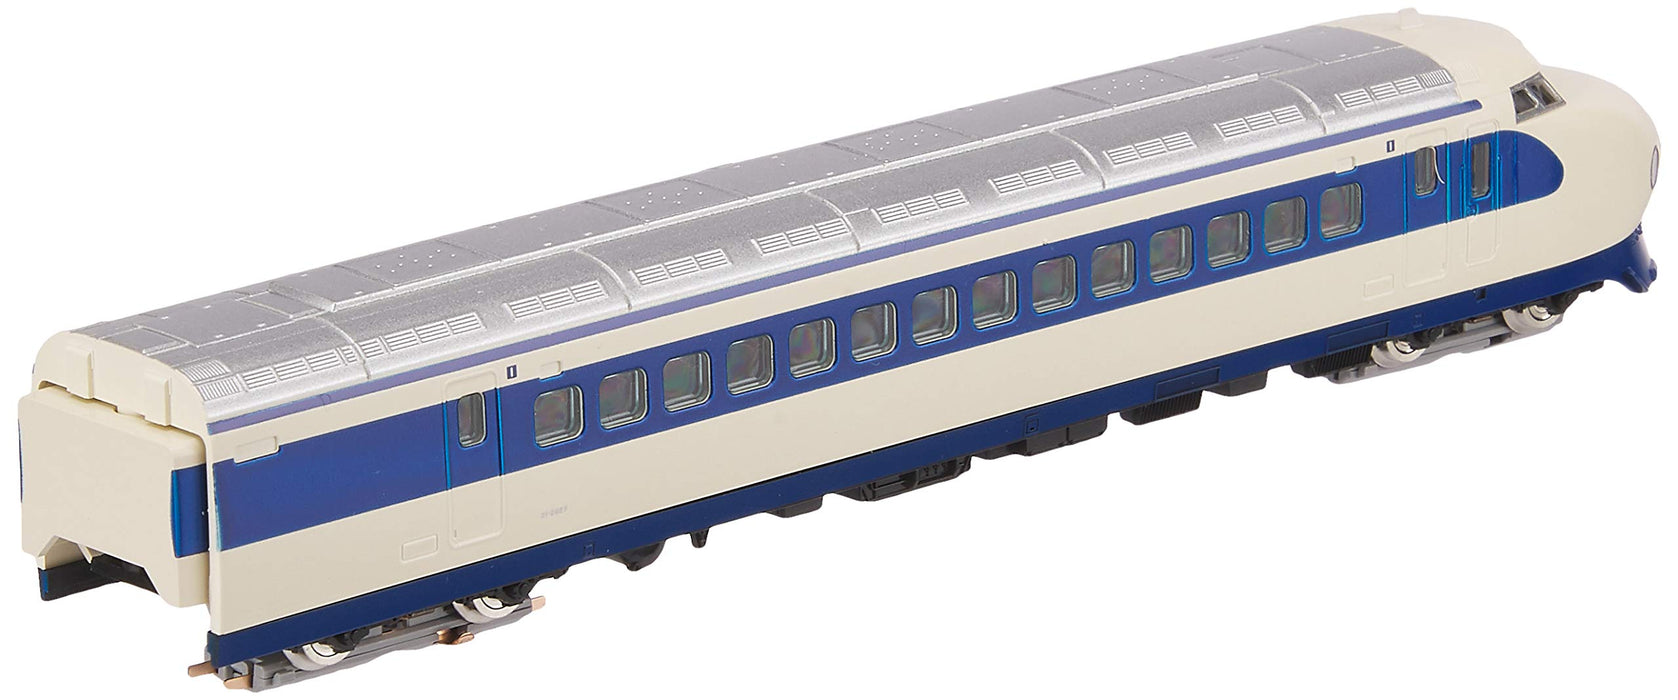 Tomytec Kodama FM-015 Train miniature – Série Tomix N Gauge 0-2000